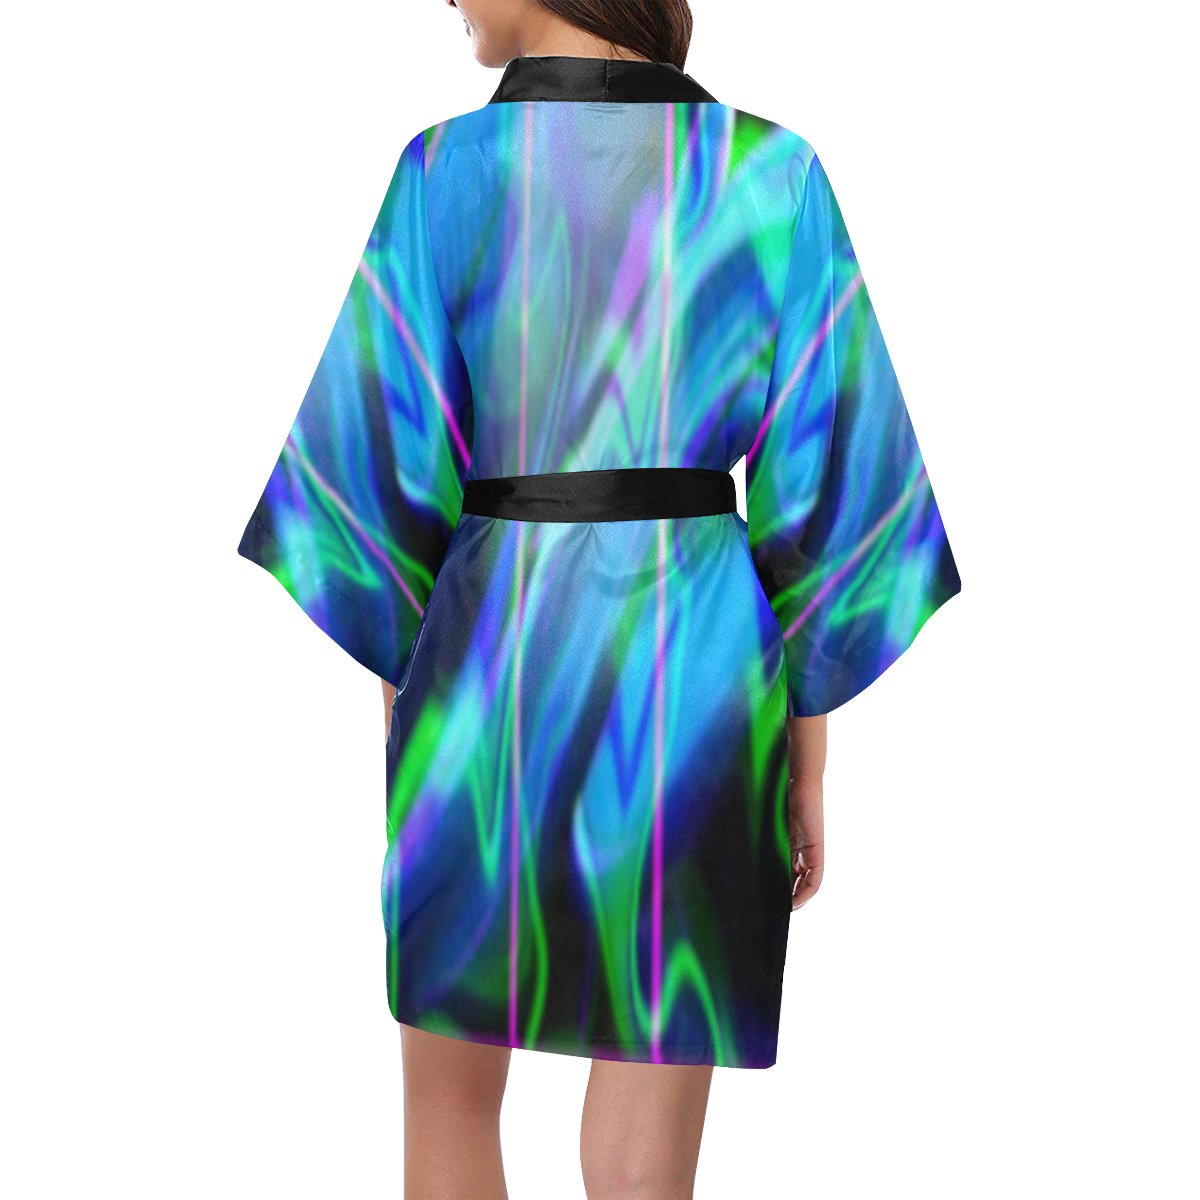 greenrace Kimono Robe